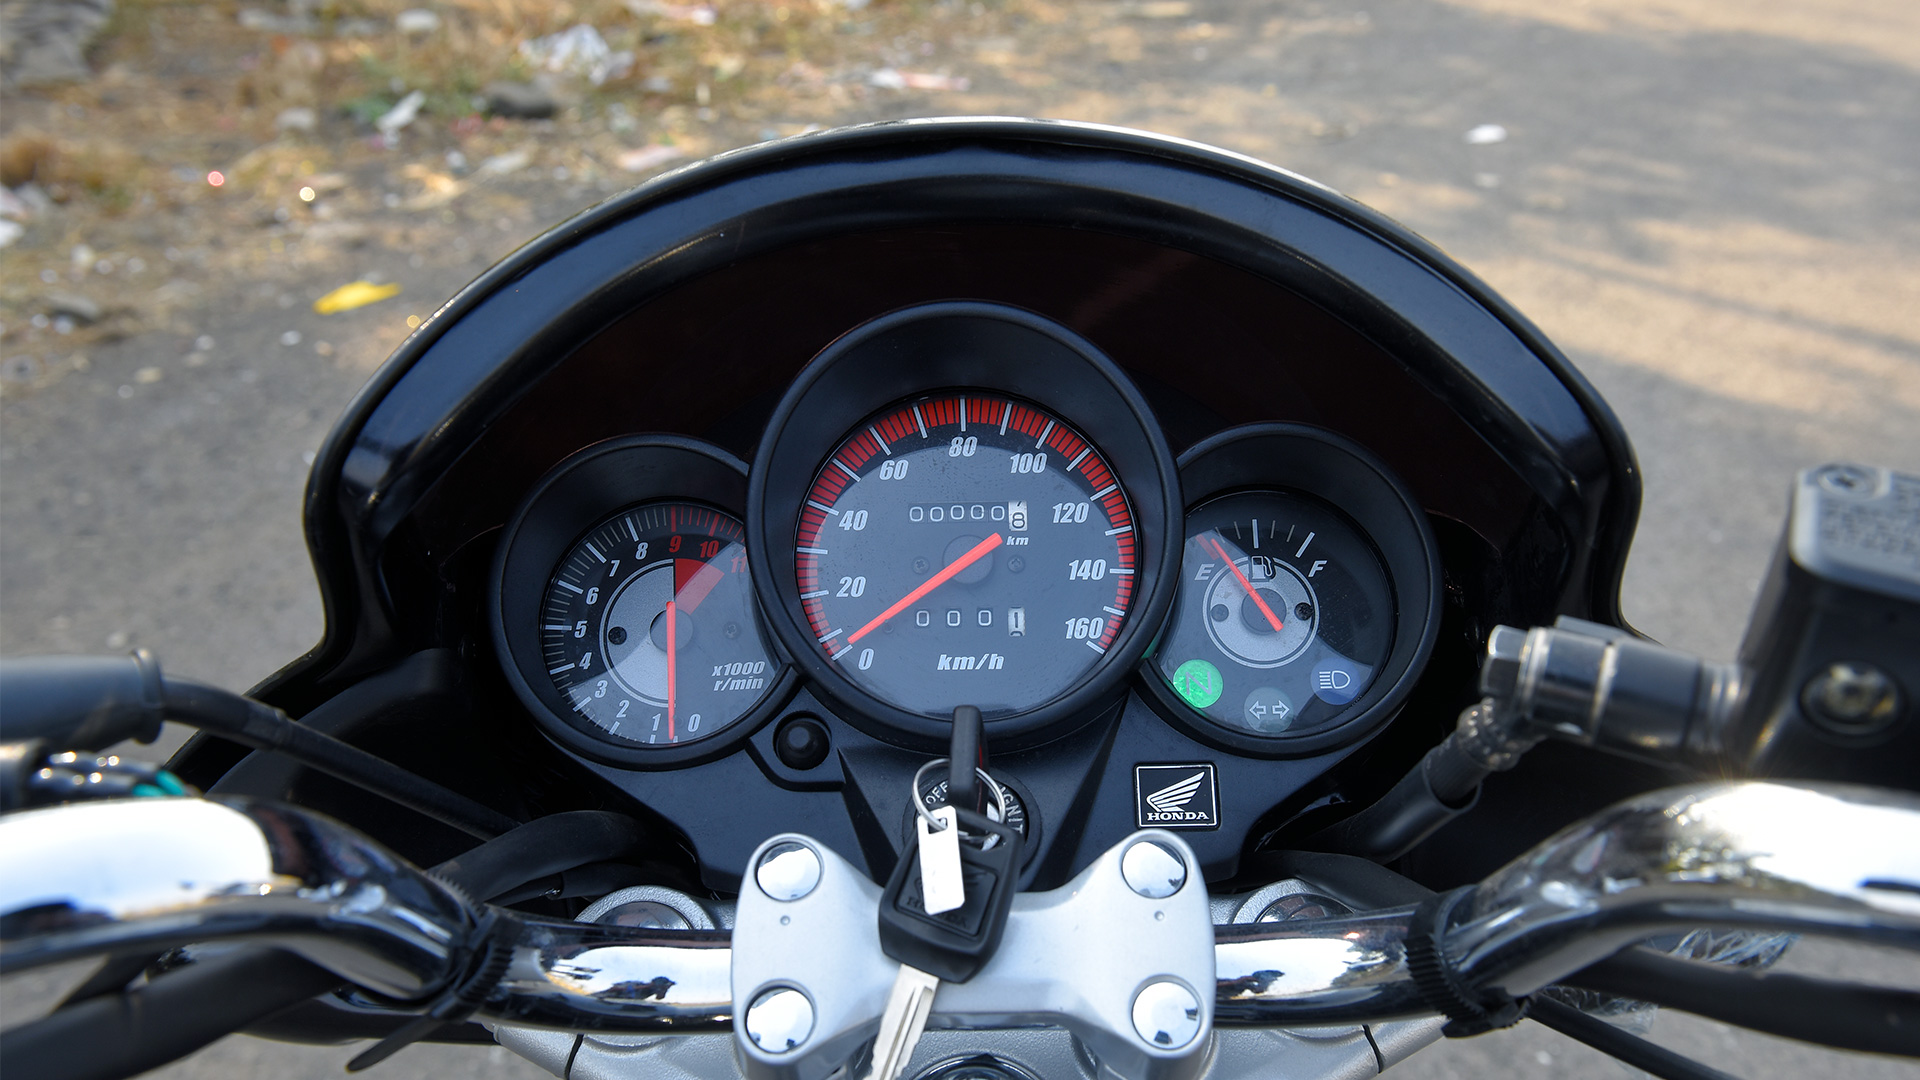 Honda CB Unicorn 150 2016 STD Compare